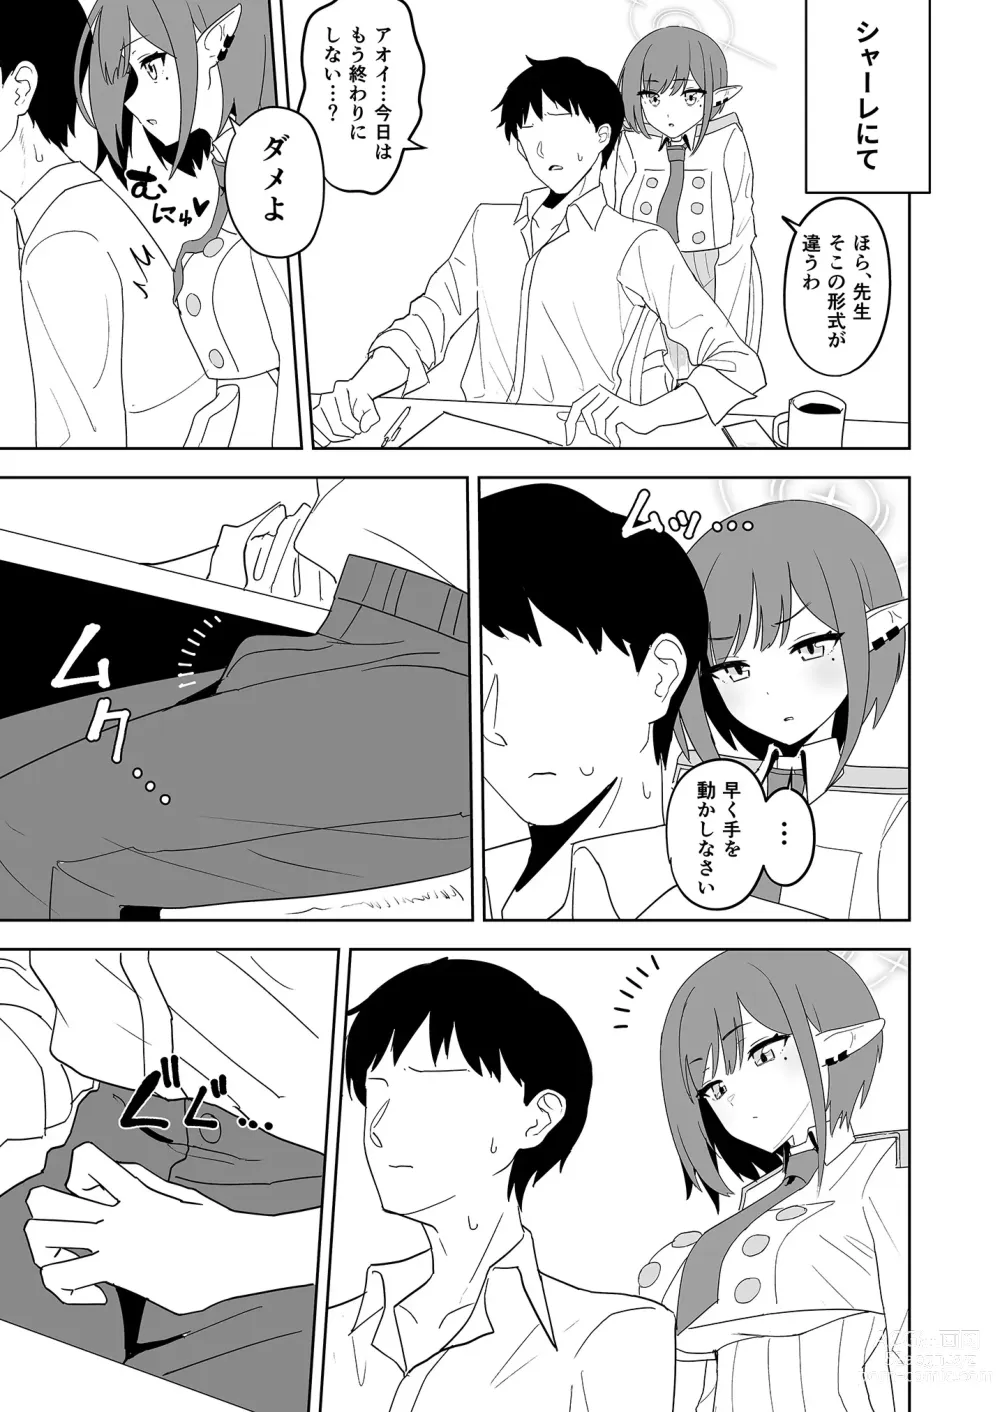 Page 2 of doujinshi Aoi ni Tekoki Shite Moraou - Lets Aoi give you a hand job.